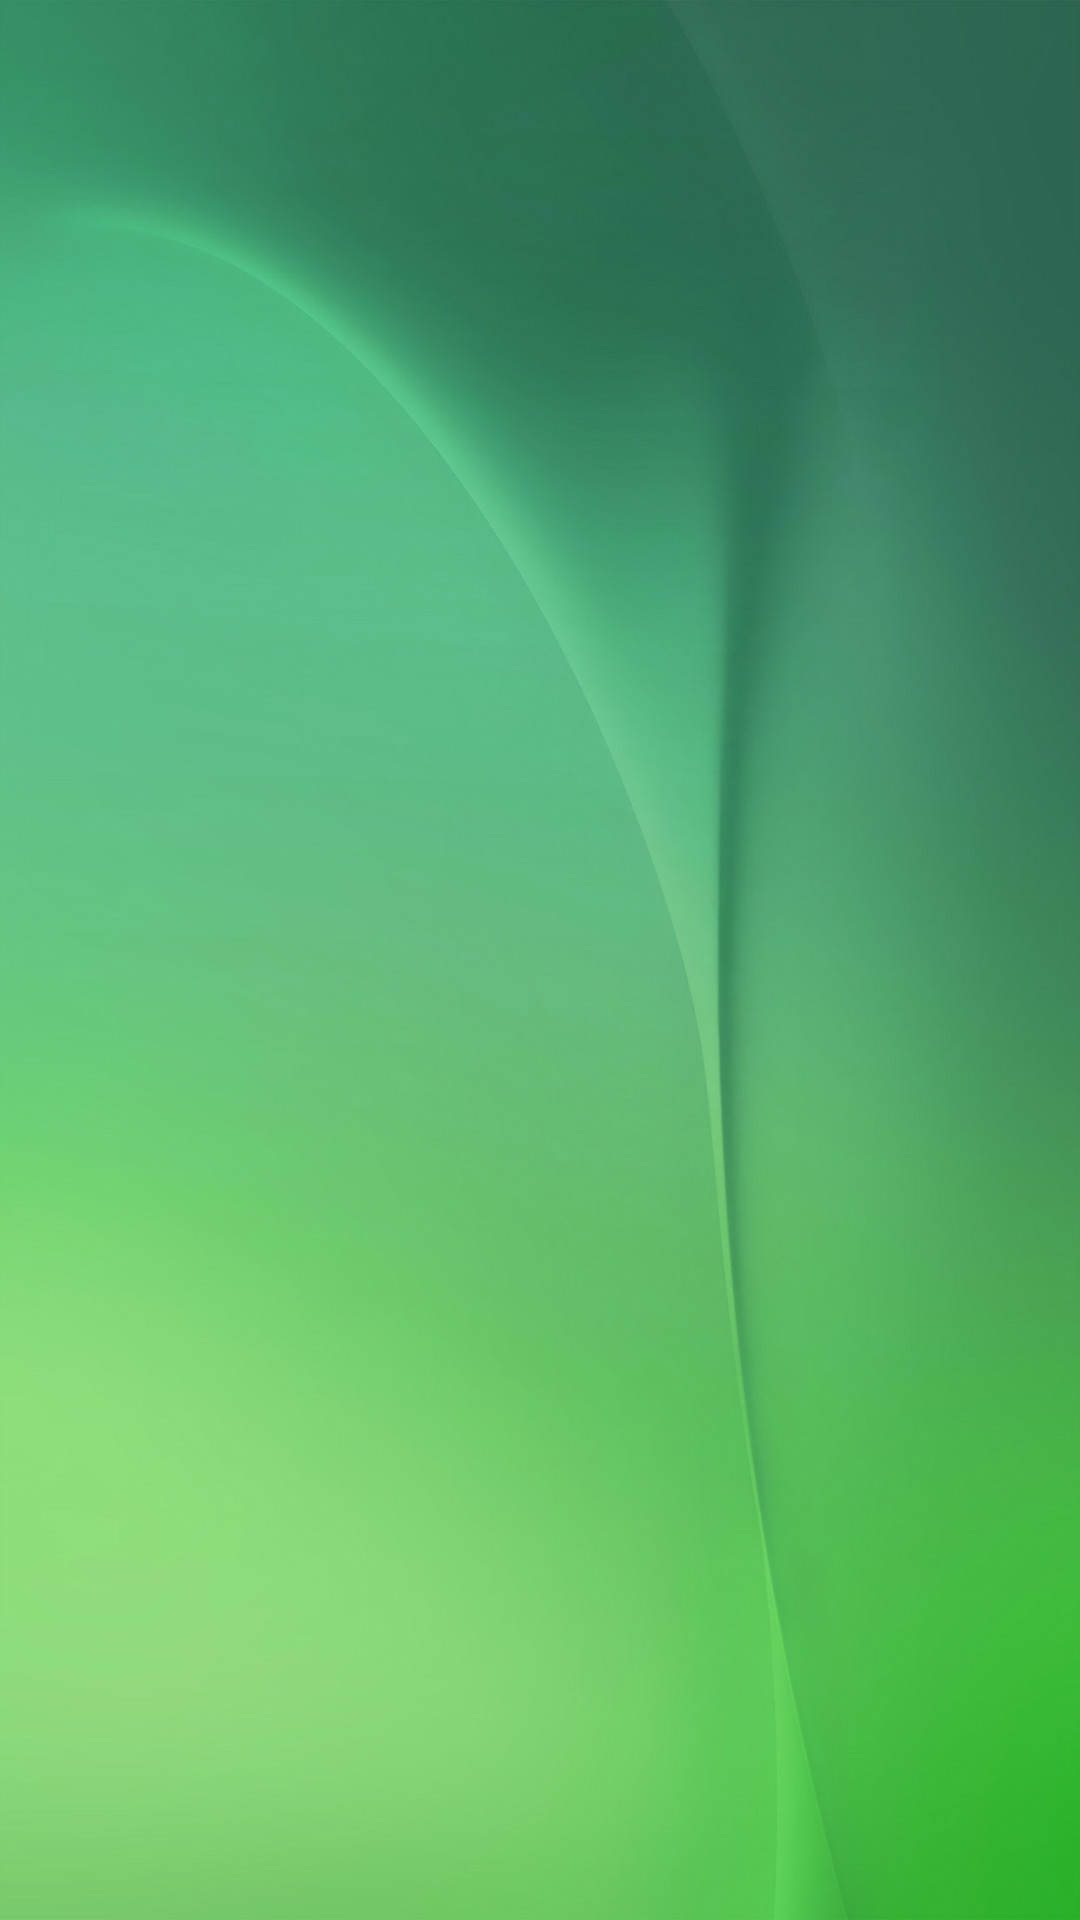 Mint Green iPhone Wallpaper (60+ images)